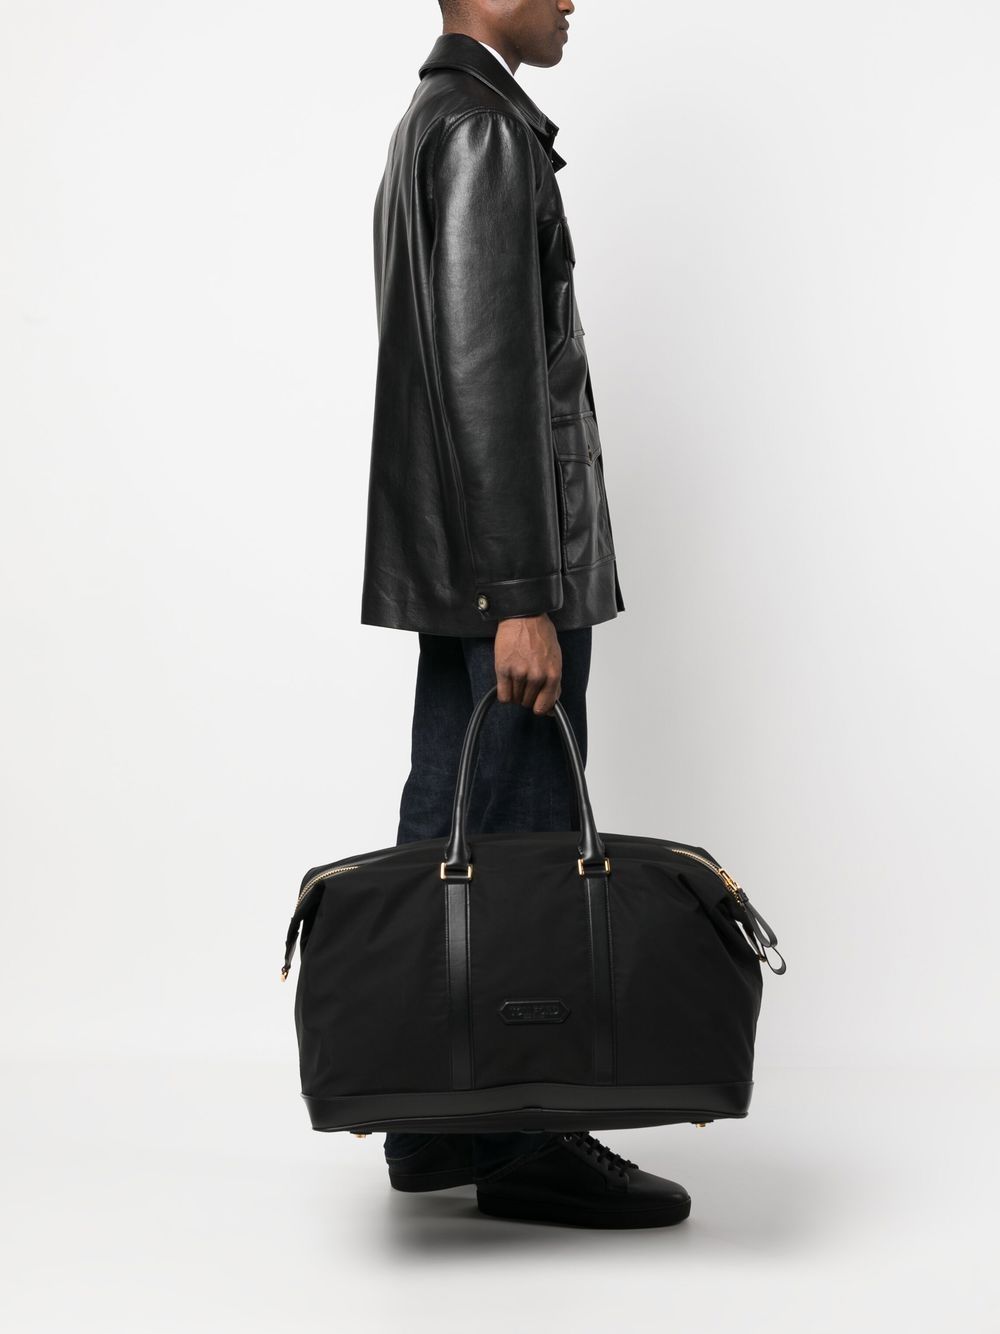 TOM FORD Black Leather Duffel Handbag for Men with Logo Detail